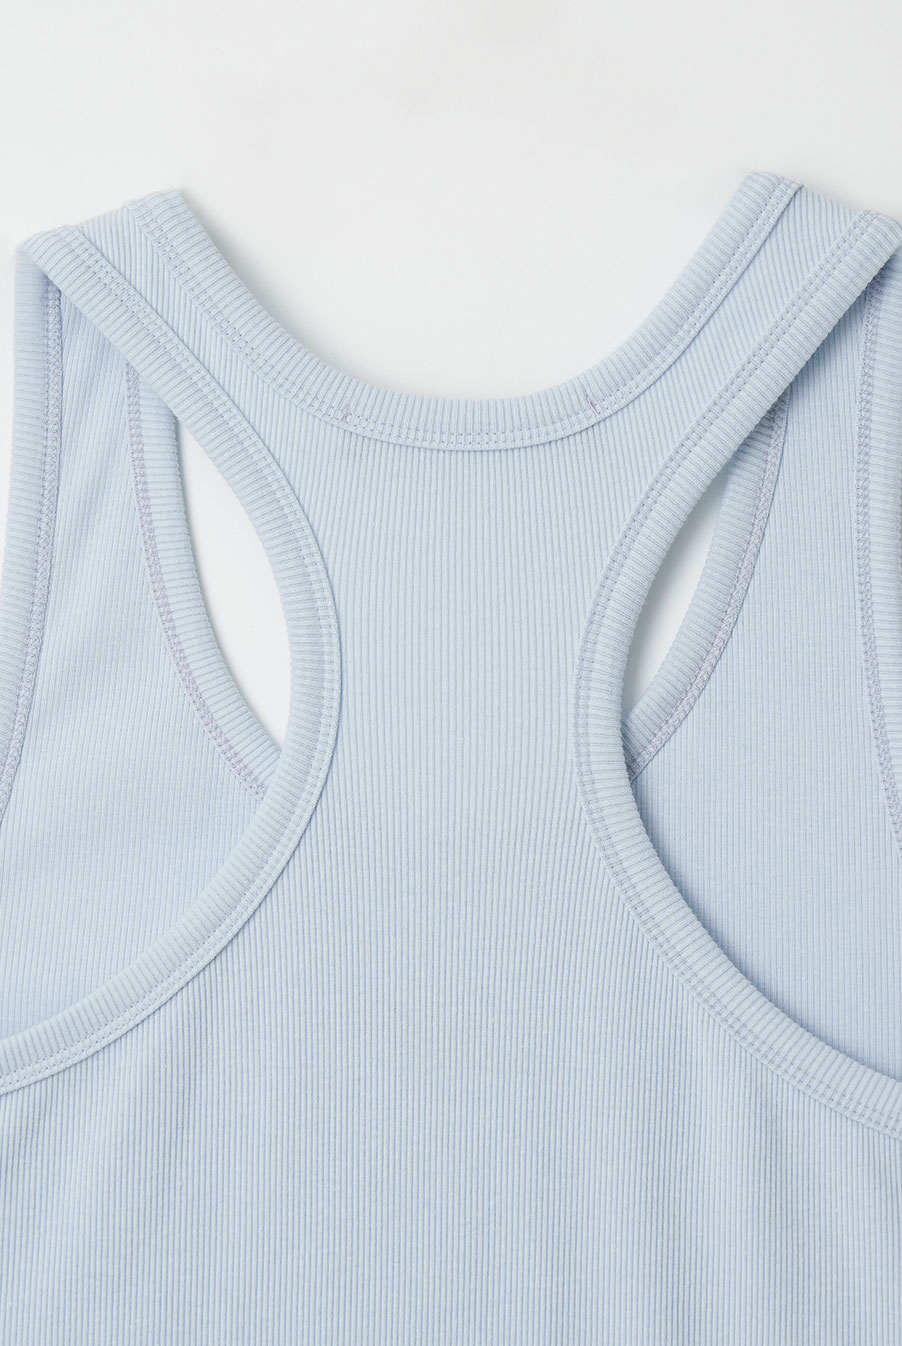 Basic curve sleeveless - Sky blue